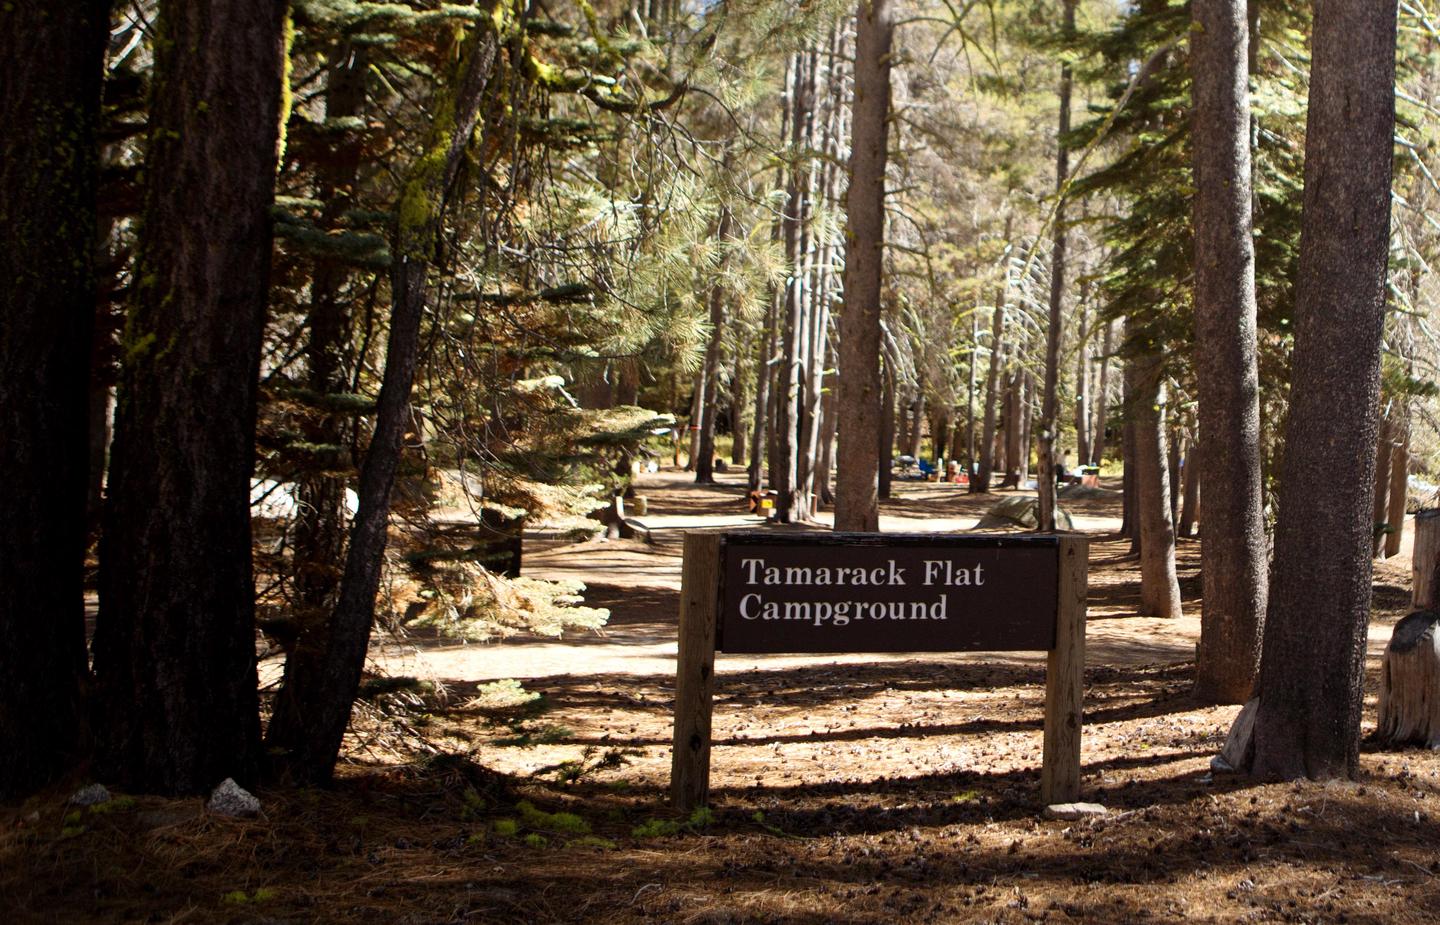 Tamarack Flat Campground SignThe entrance to Tamarack Flat Campground